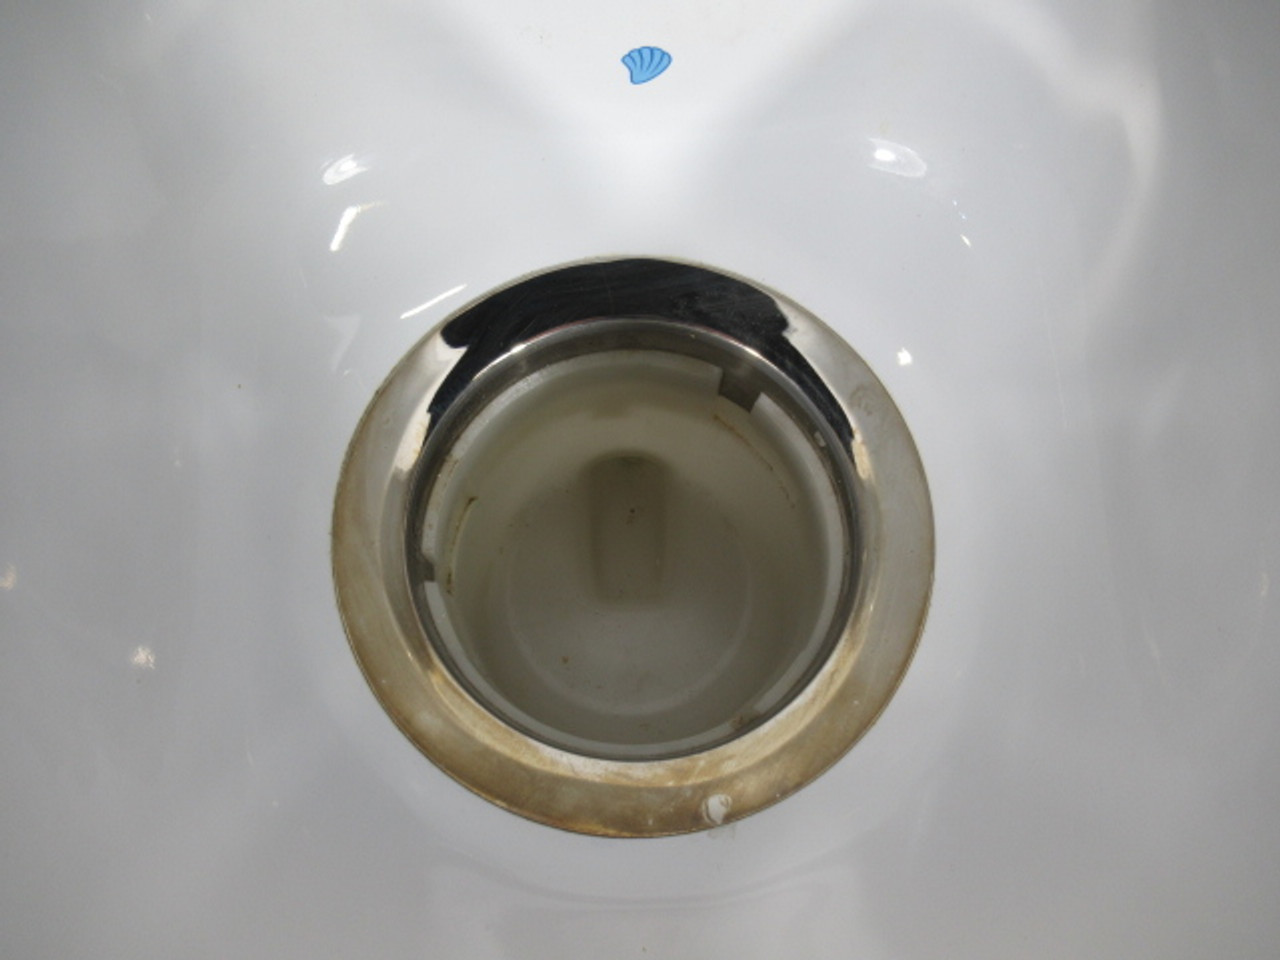 Falcon F7000 White Waterless Urinal Vitreous China C/W Hardware USED